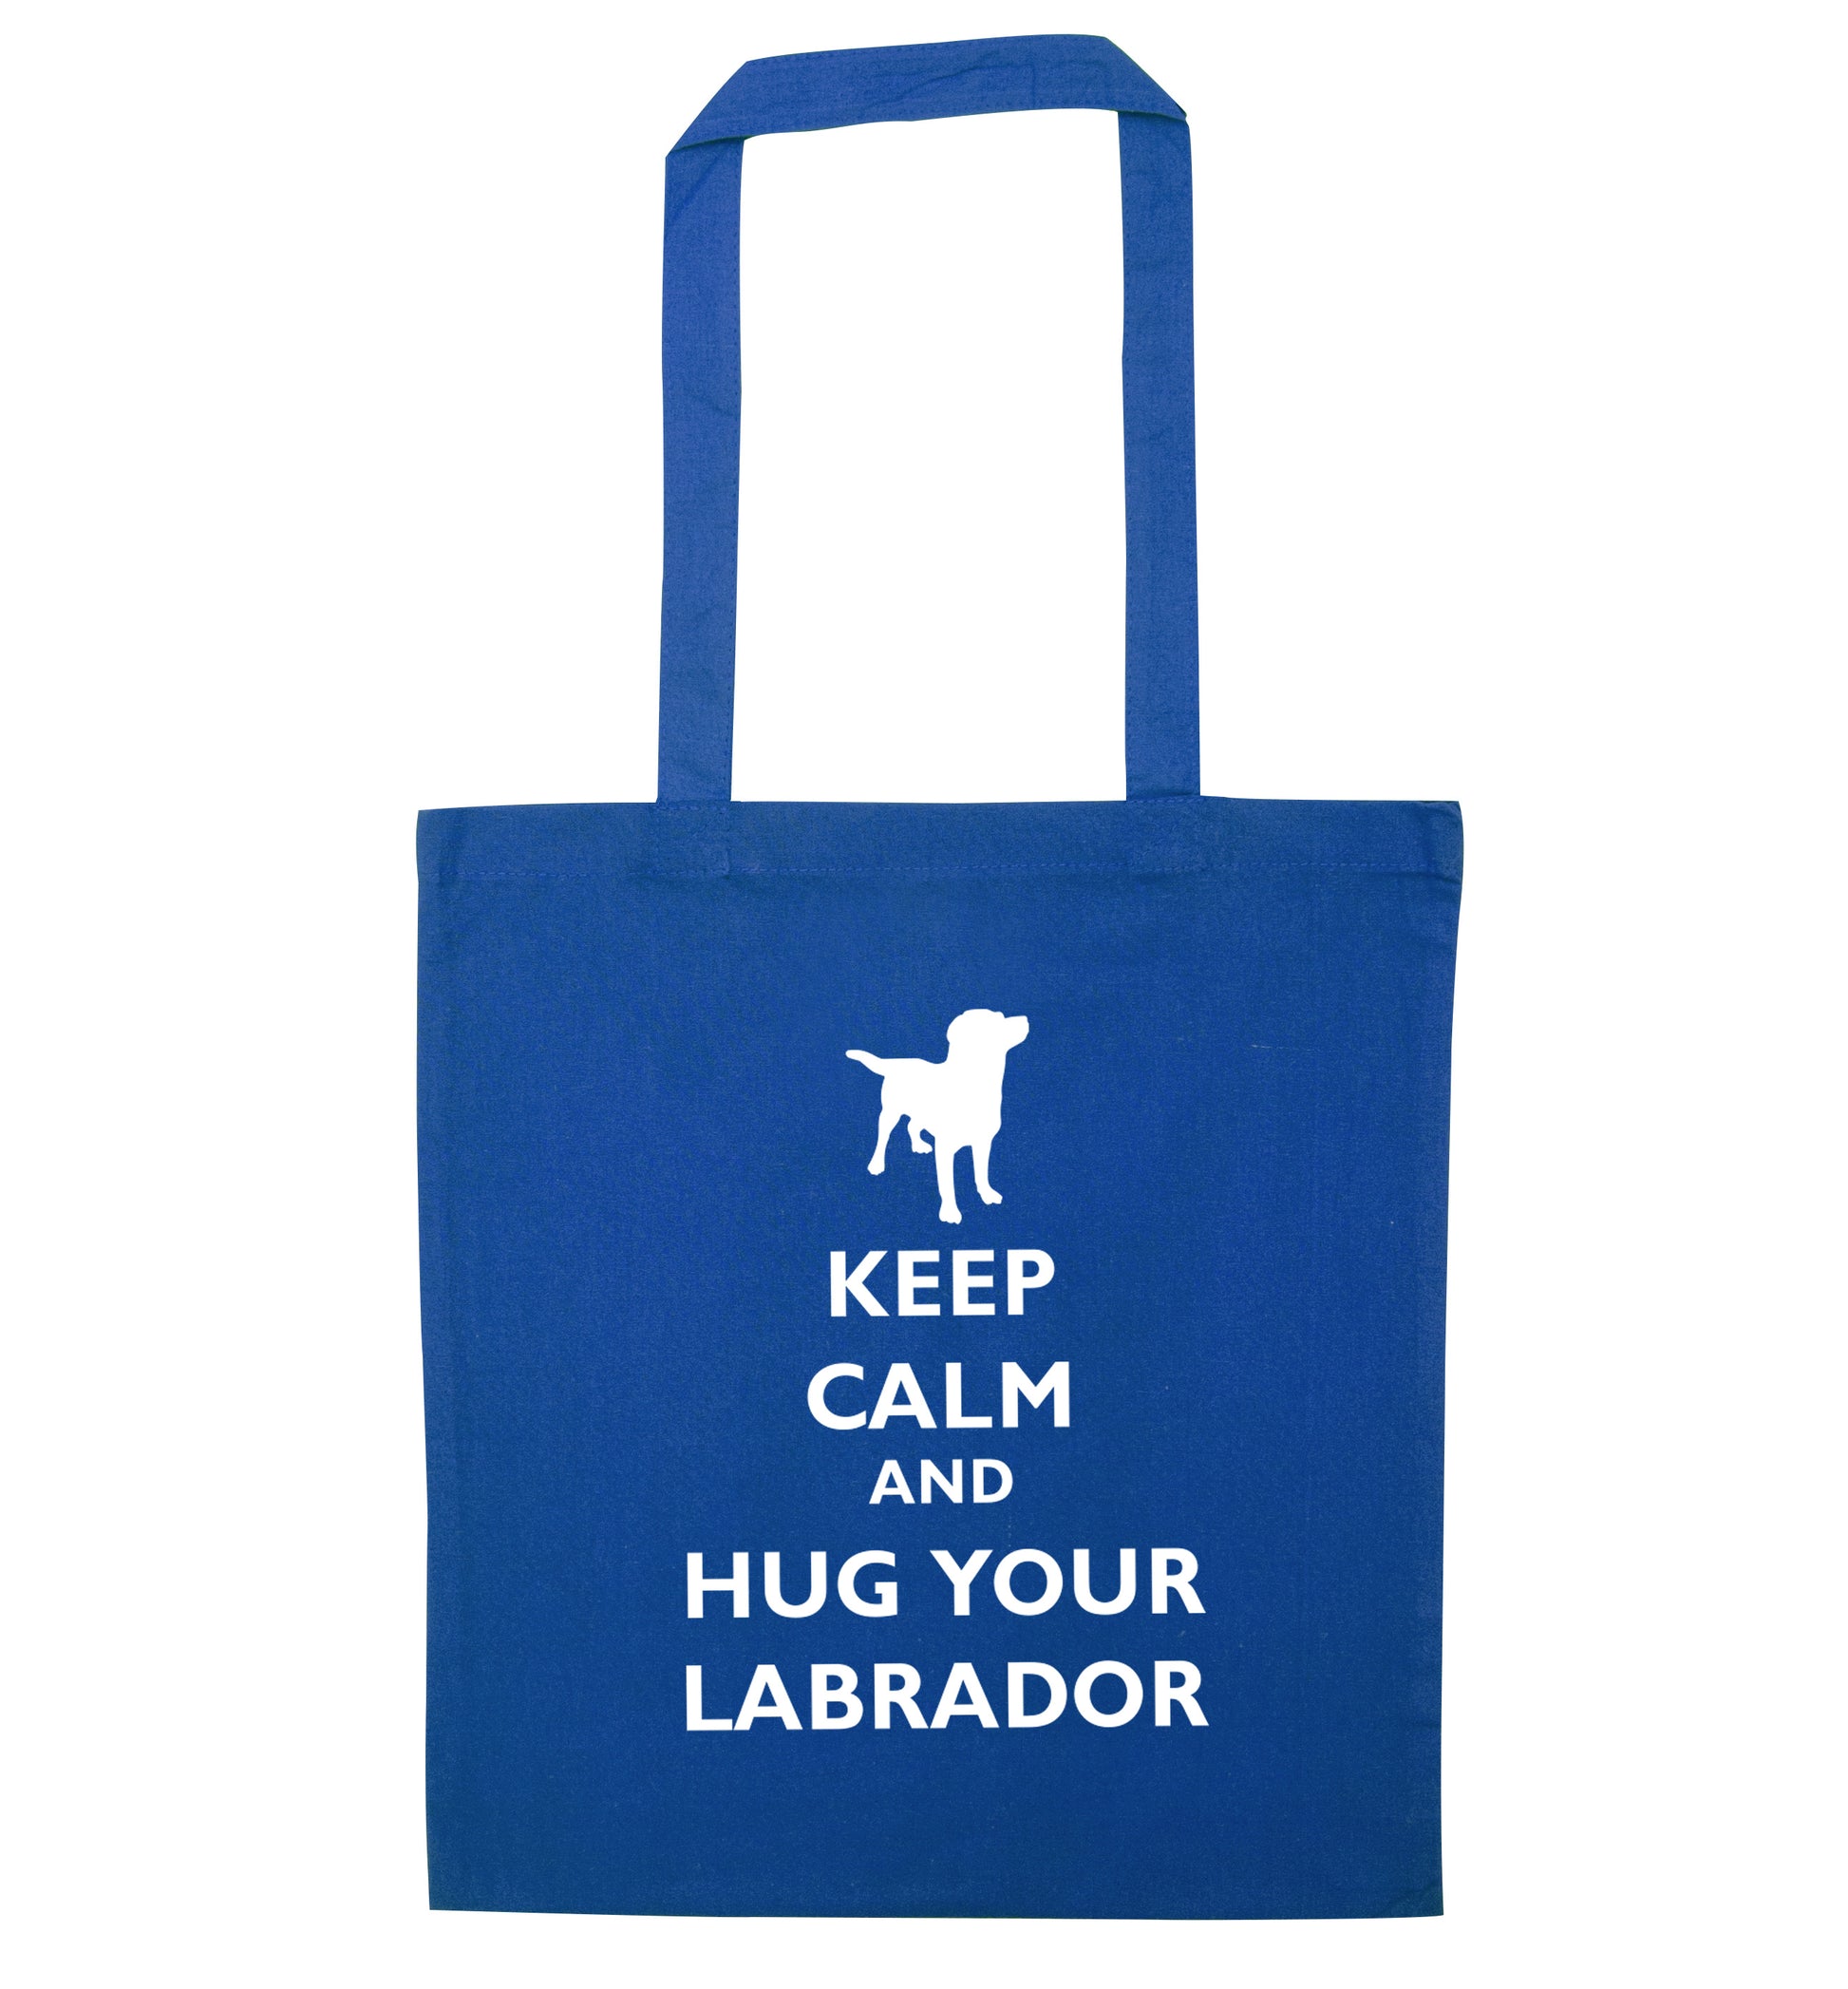 Keep calm and hug your labrador blue tote bag